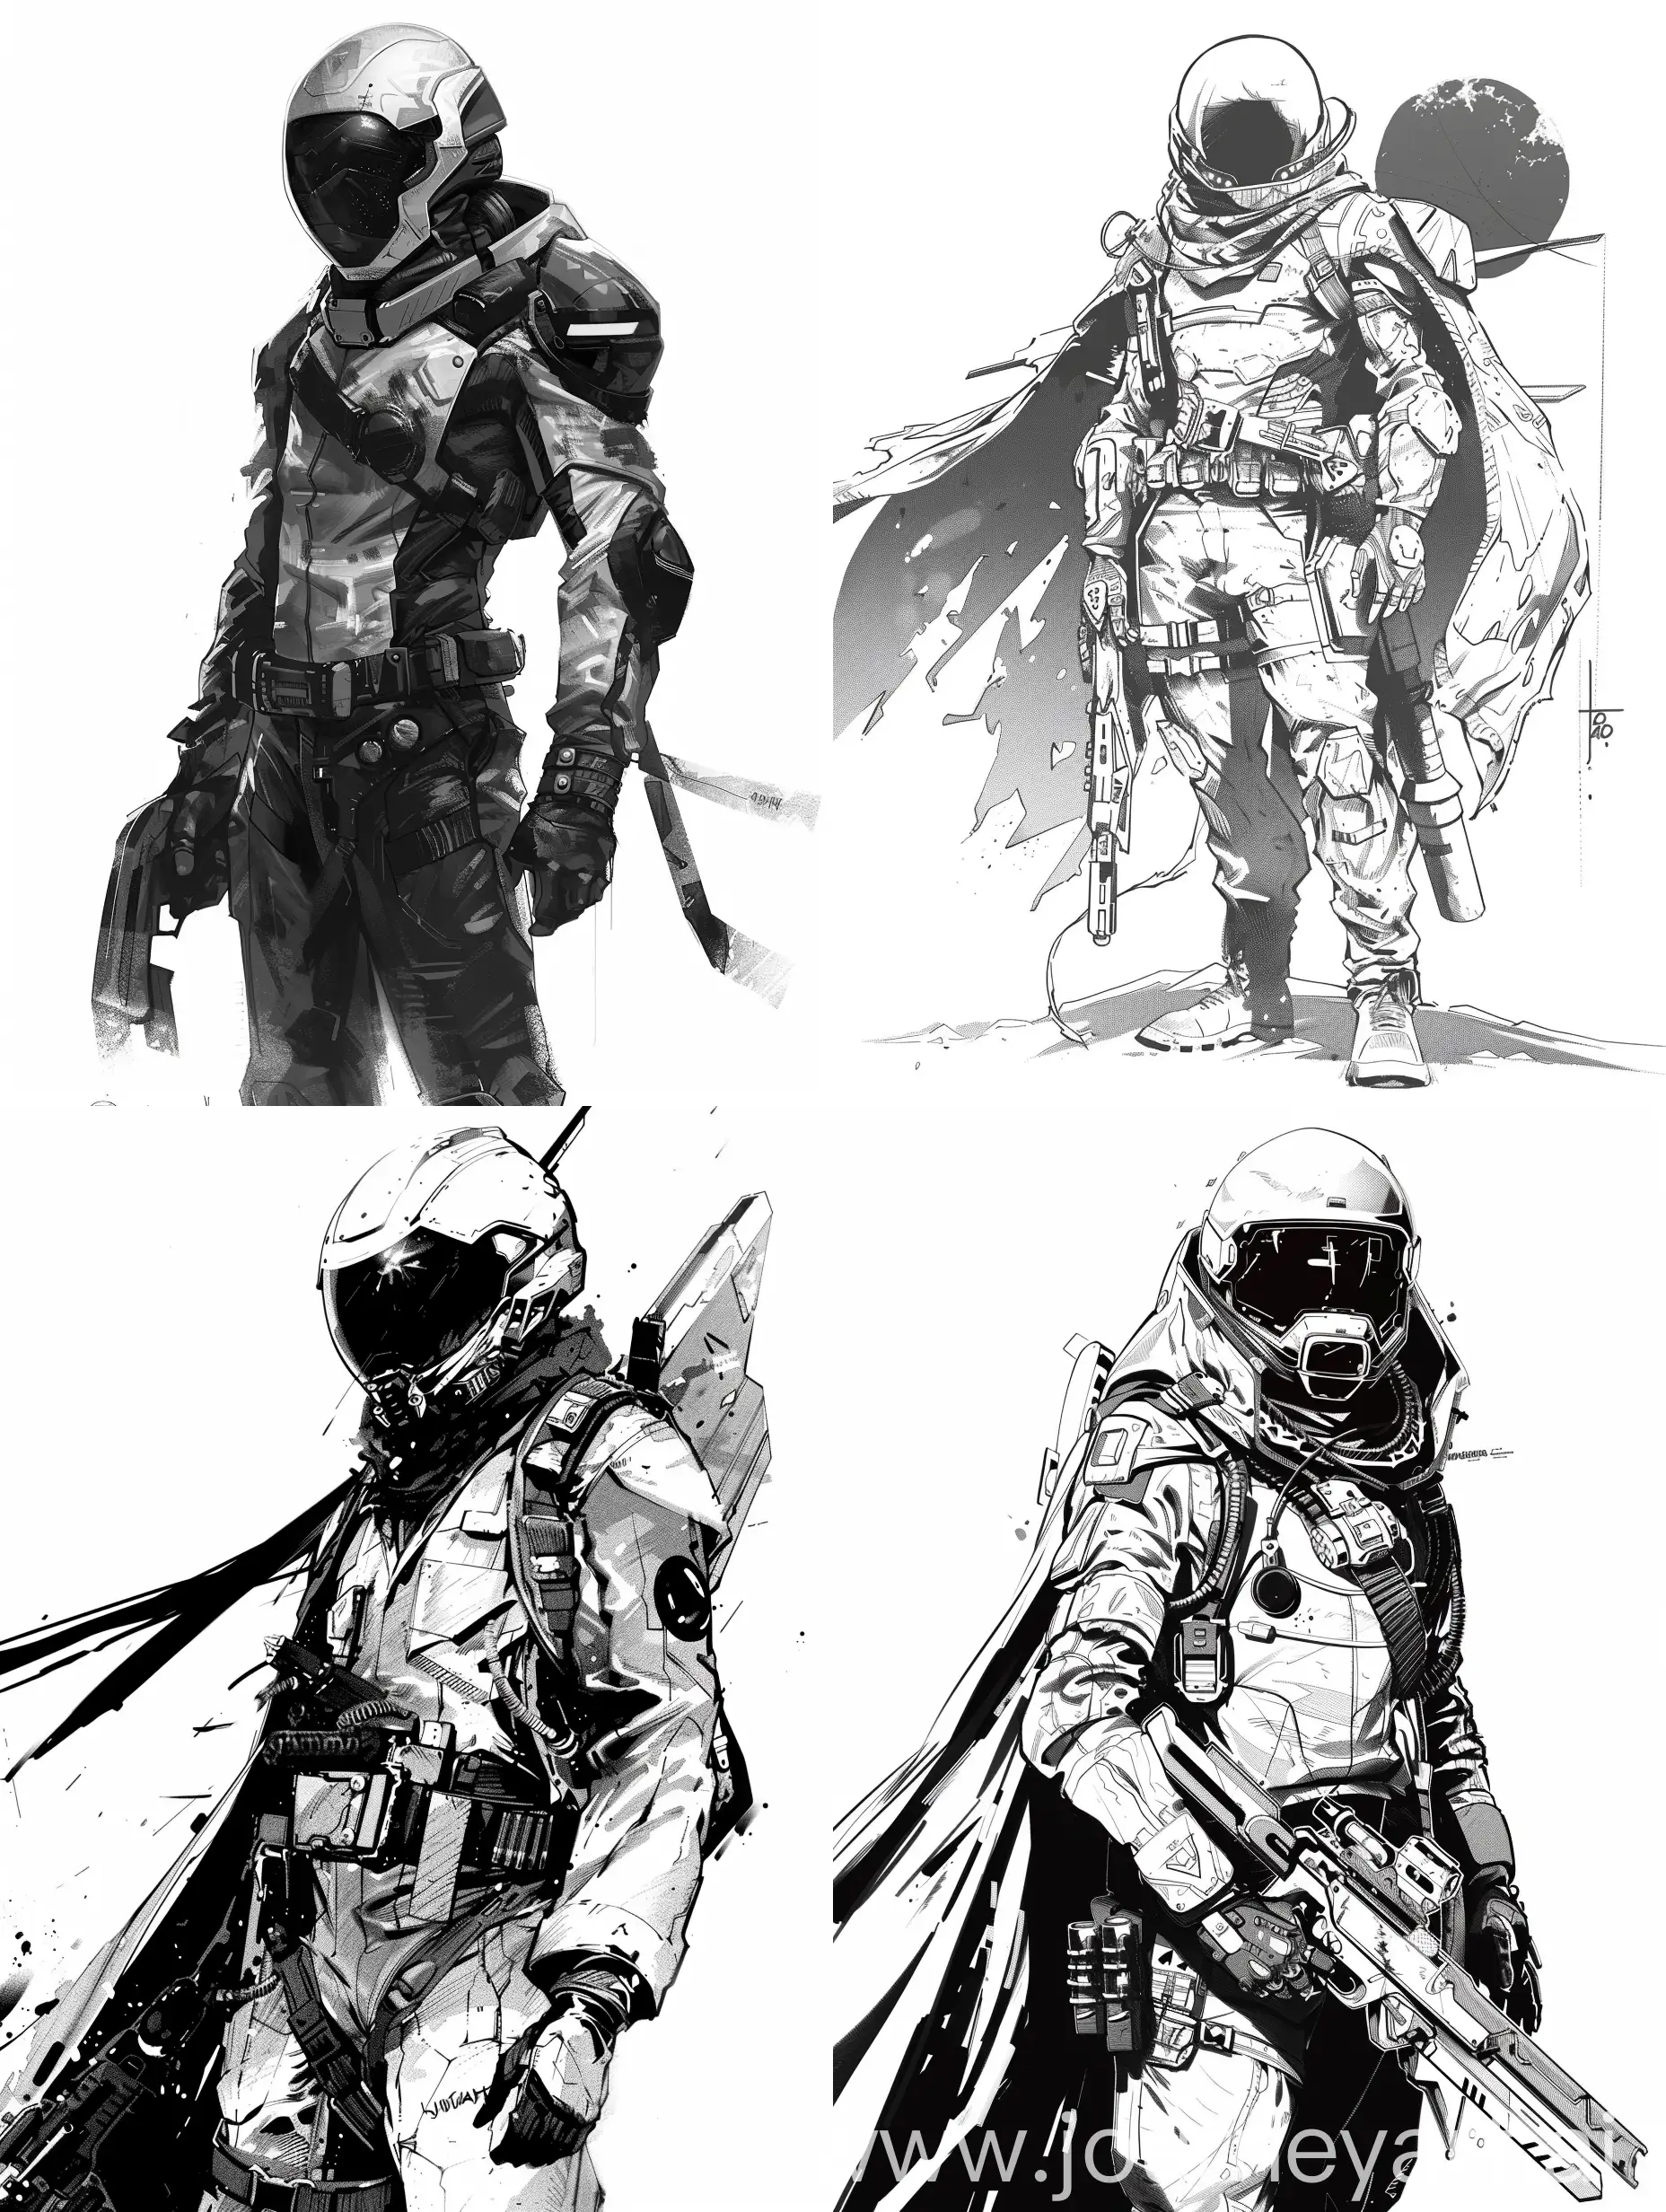 Epic-SciFi-Bounty-Reaper-Hunter-in-Dynamic-Manga-Art